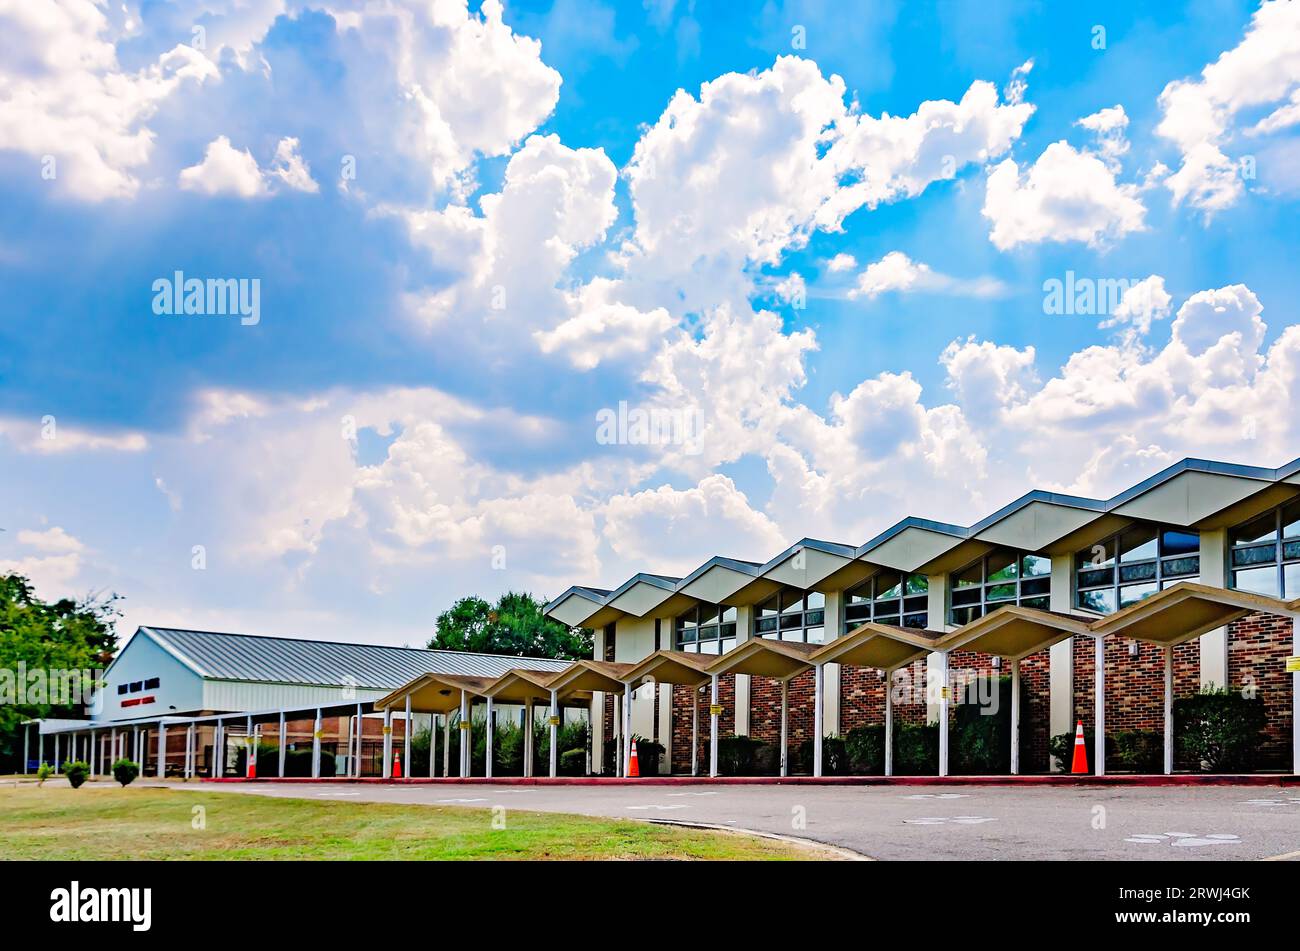 Nan Gray Davis Elementary School is pictured, Aug. 26, 2023, in Theodore, Alabama. The school serves grades pre-kindergarten through five. Stock Photo